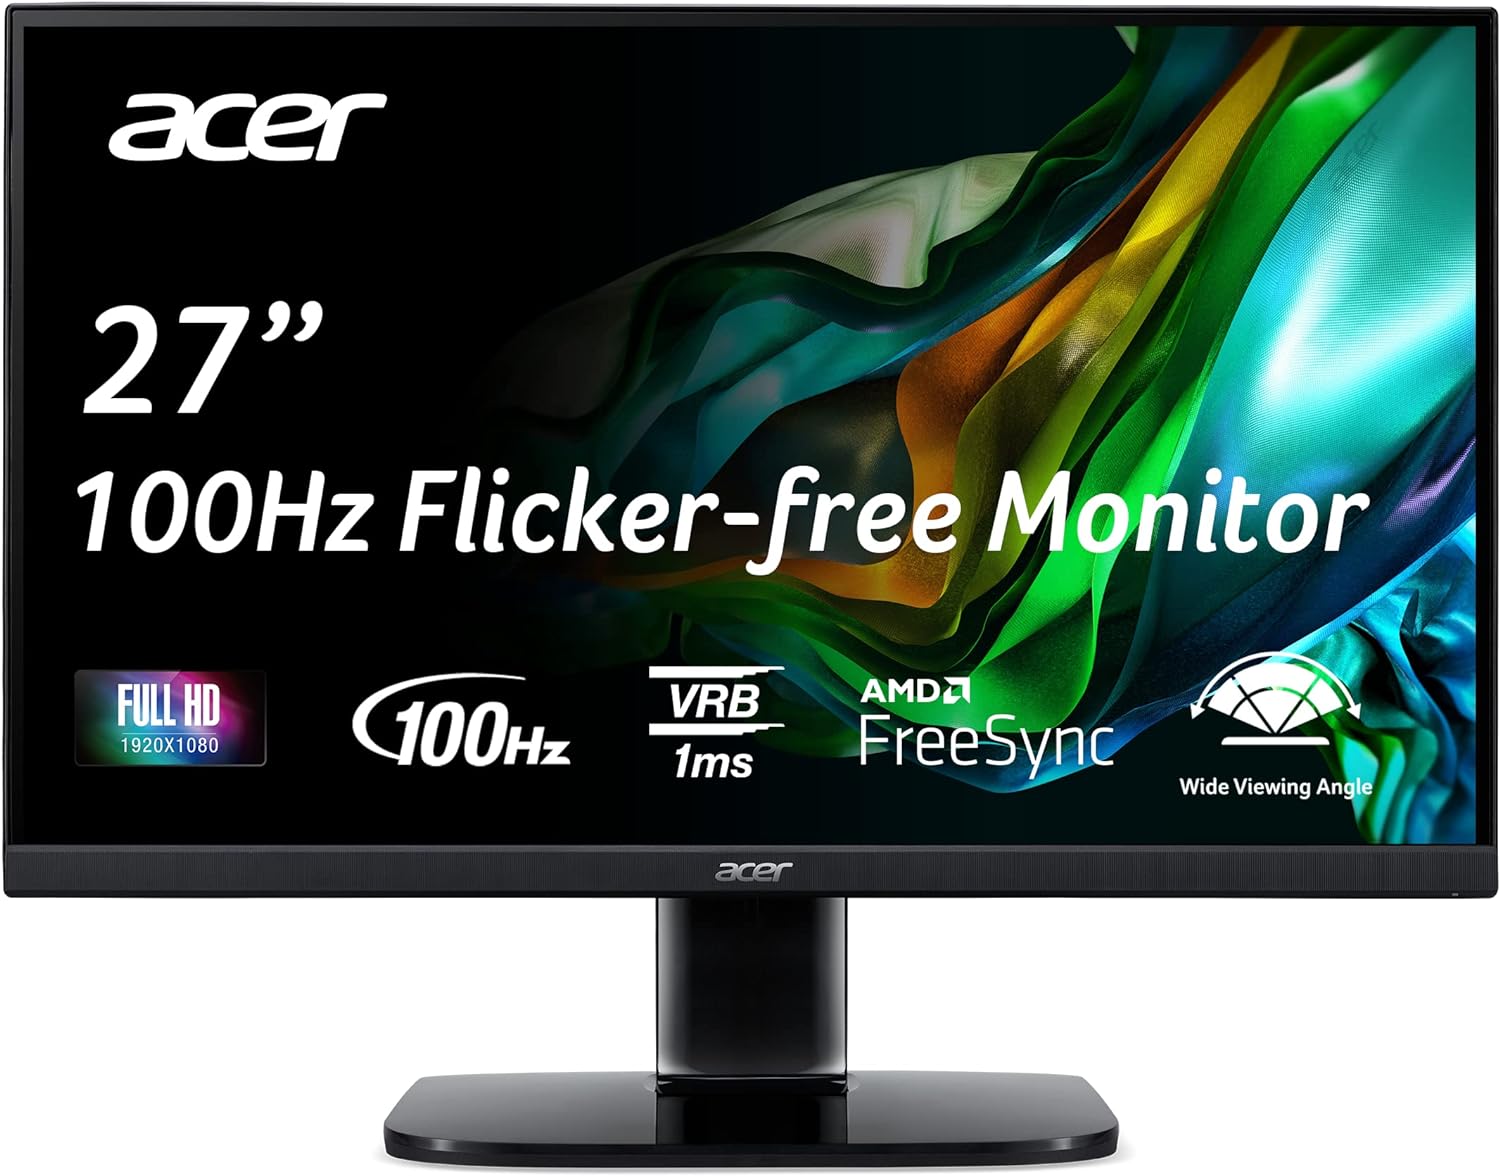 Acer KB272 Hbi 27" Full HD Monitor UMHX2AA0091